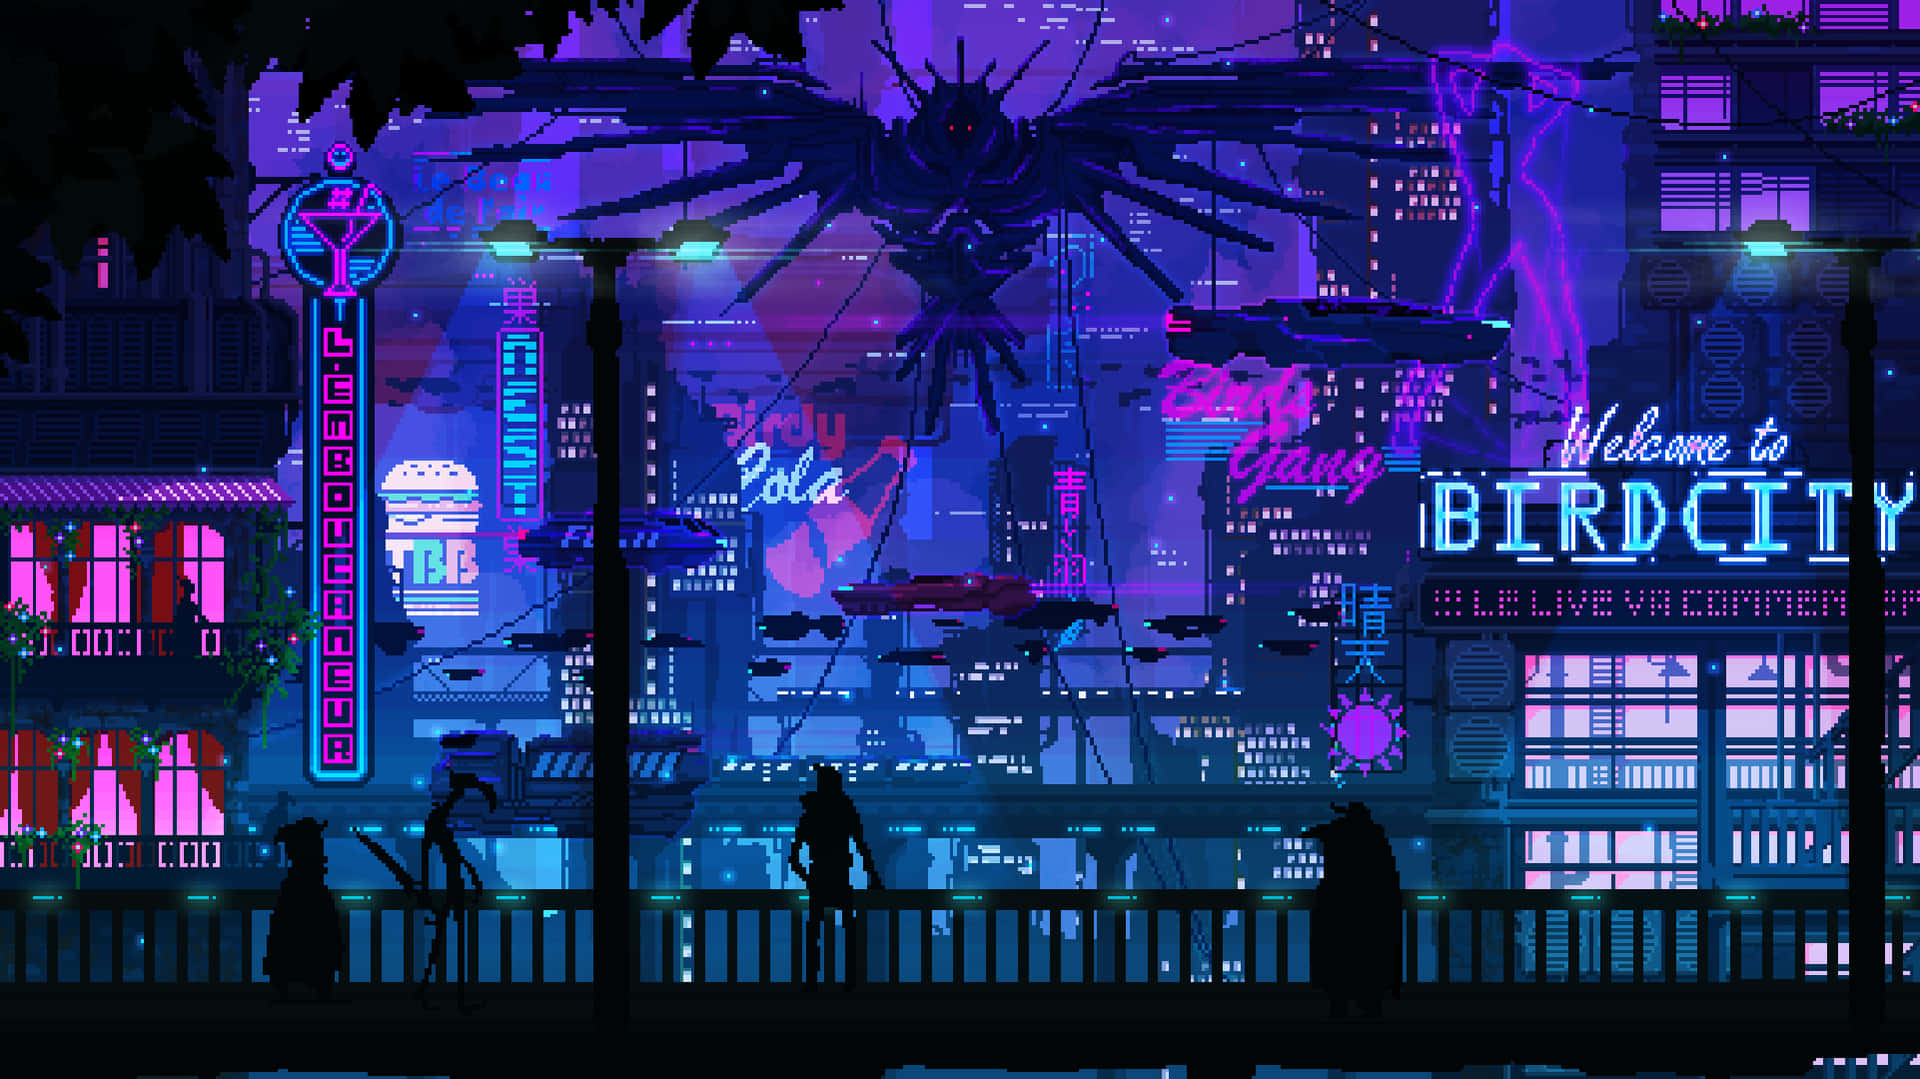 Cyberpunk Futuristic Purple World GIF